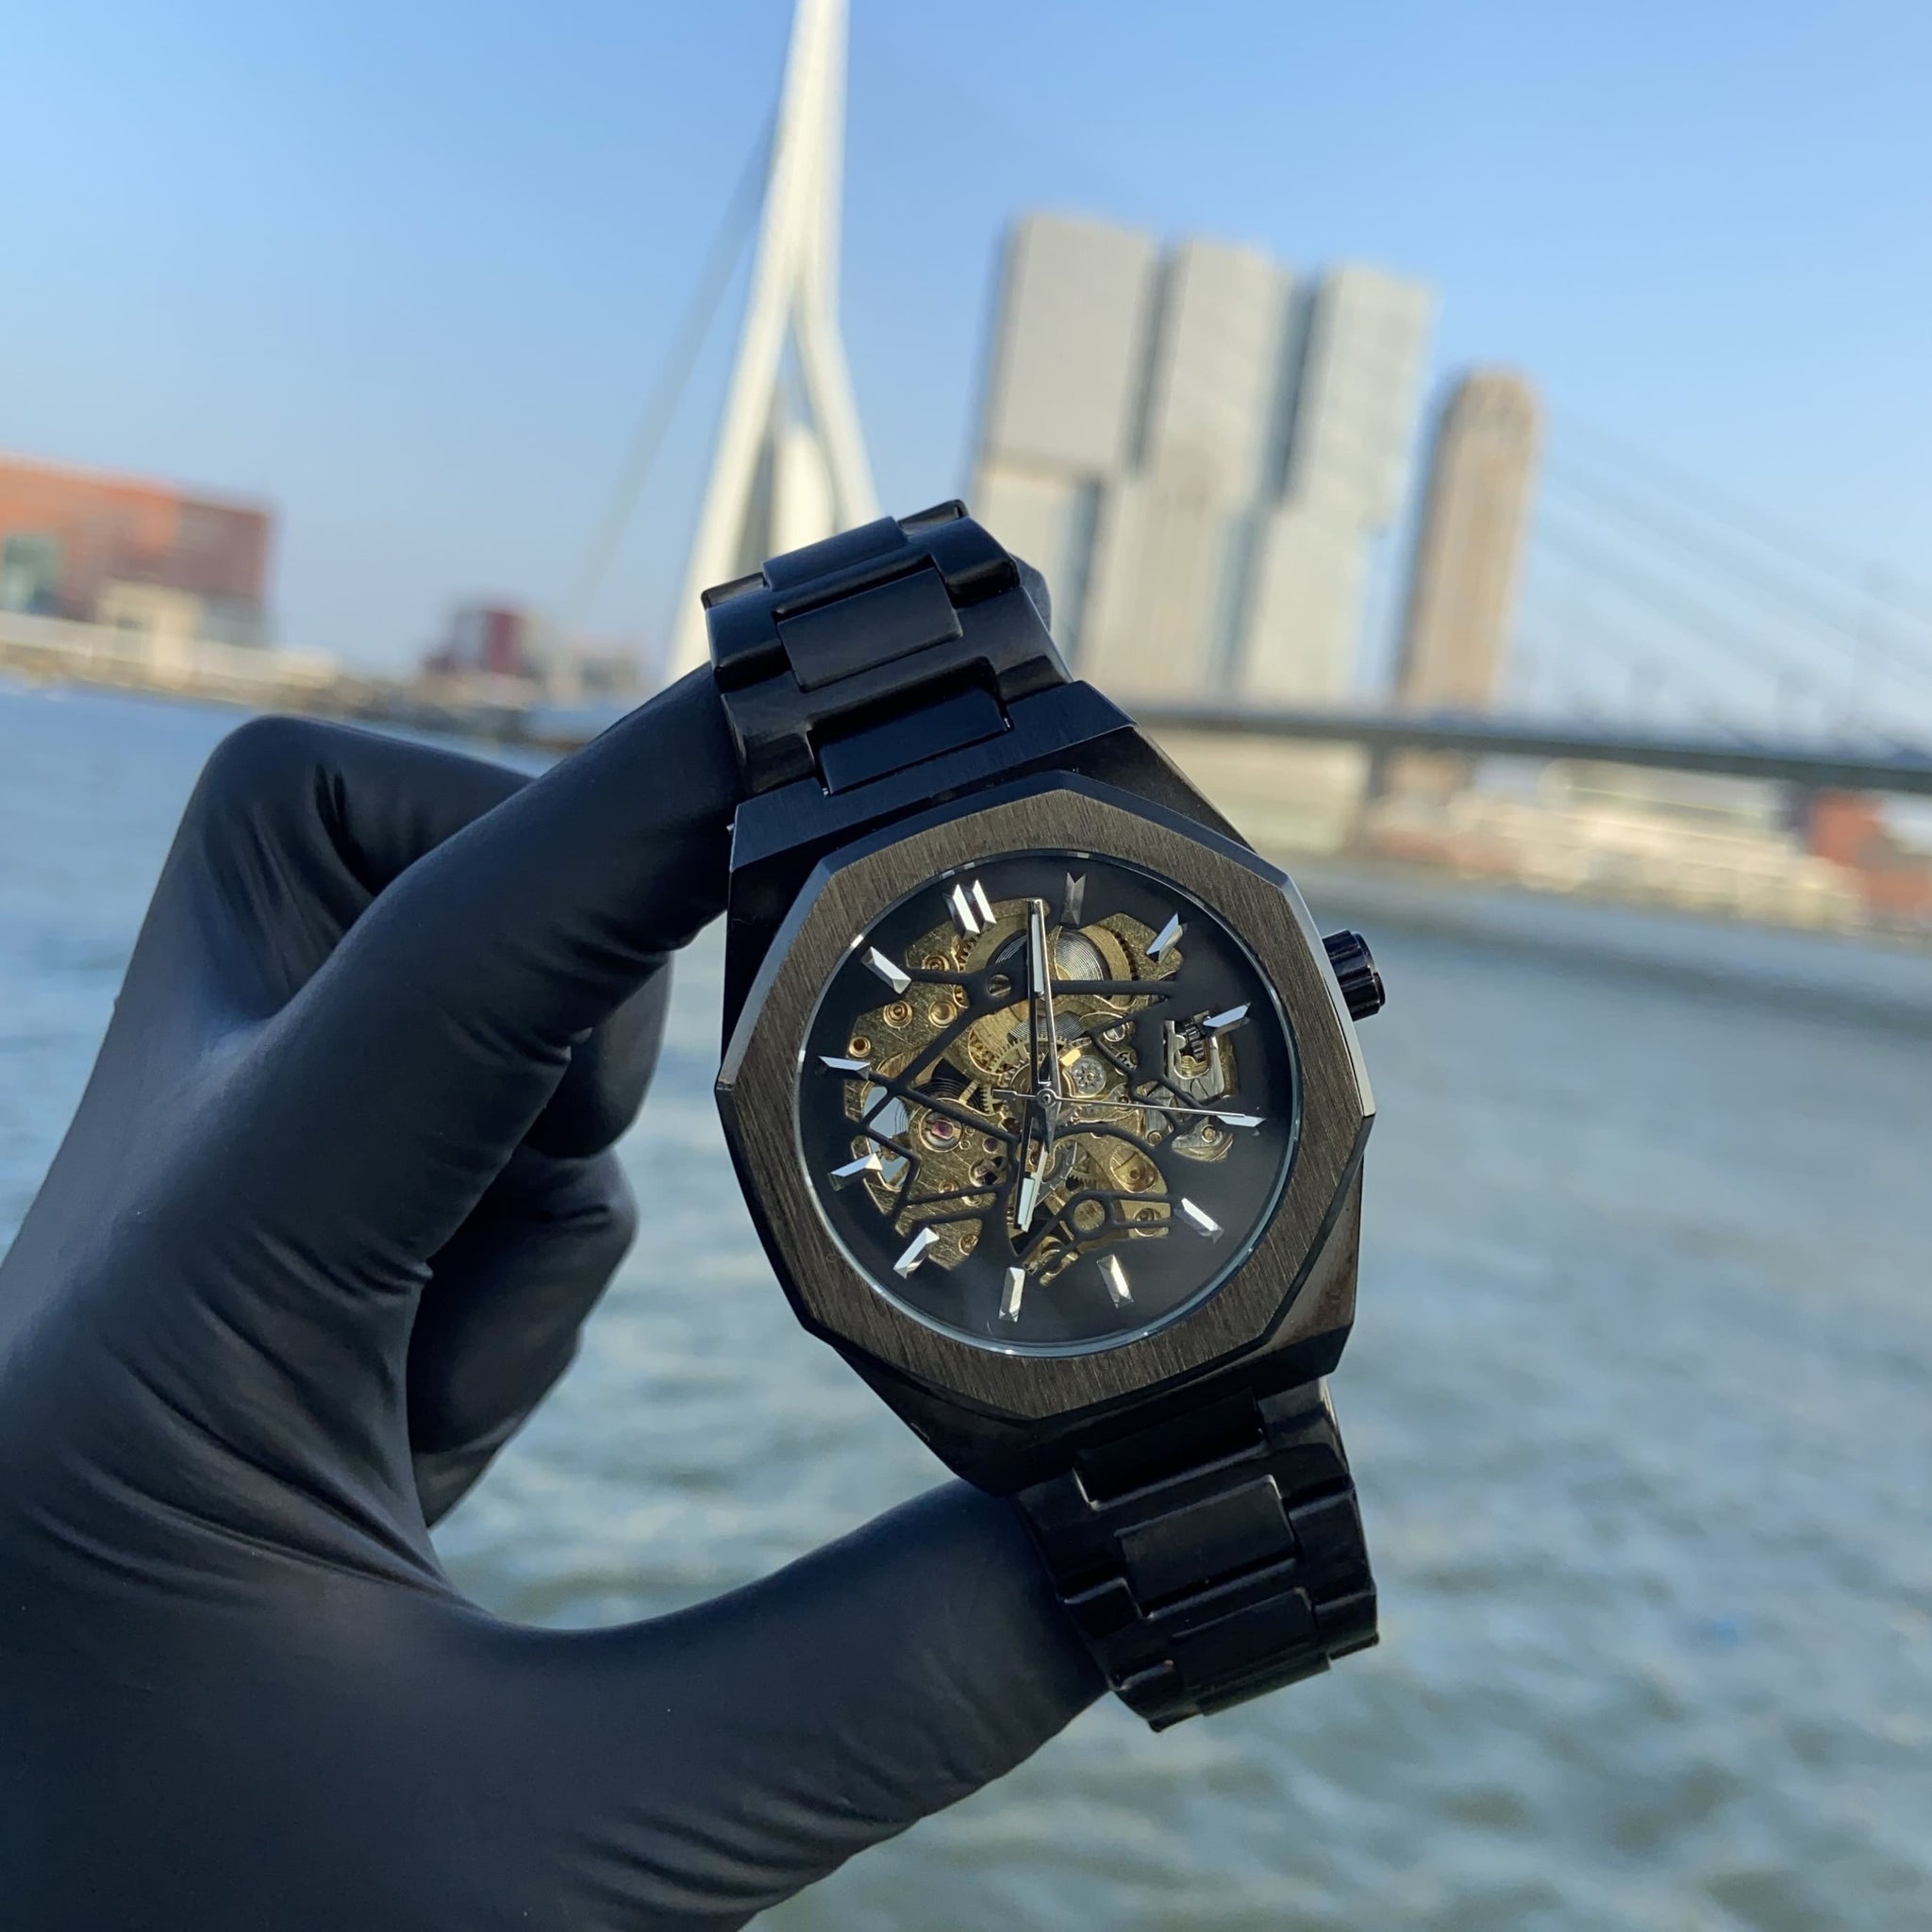 Majesty Watch 40mm - Black / Gold - Automatic Movement - Sehgal Watches